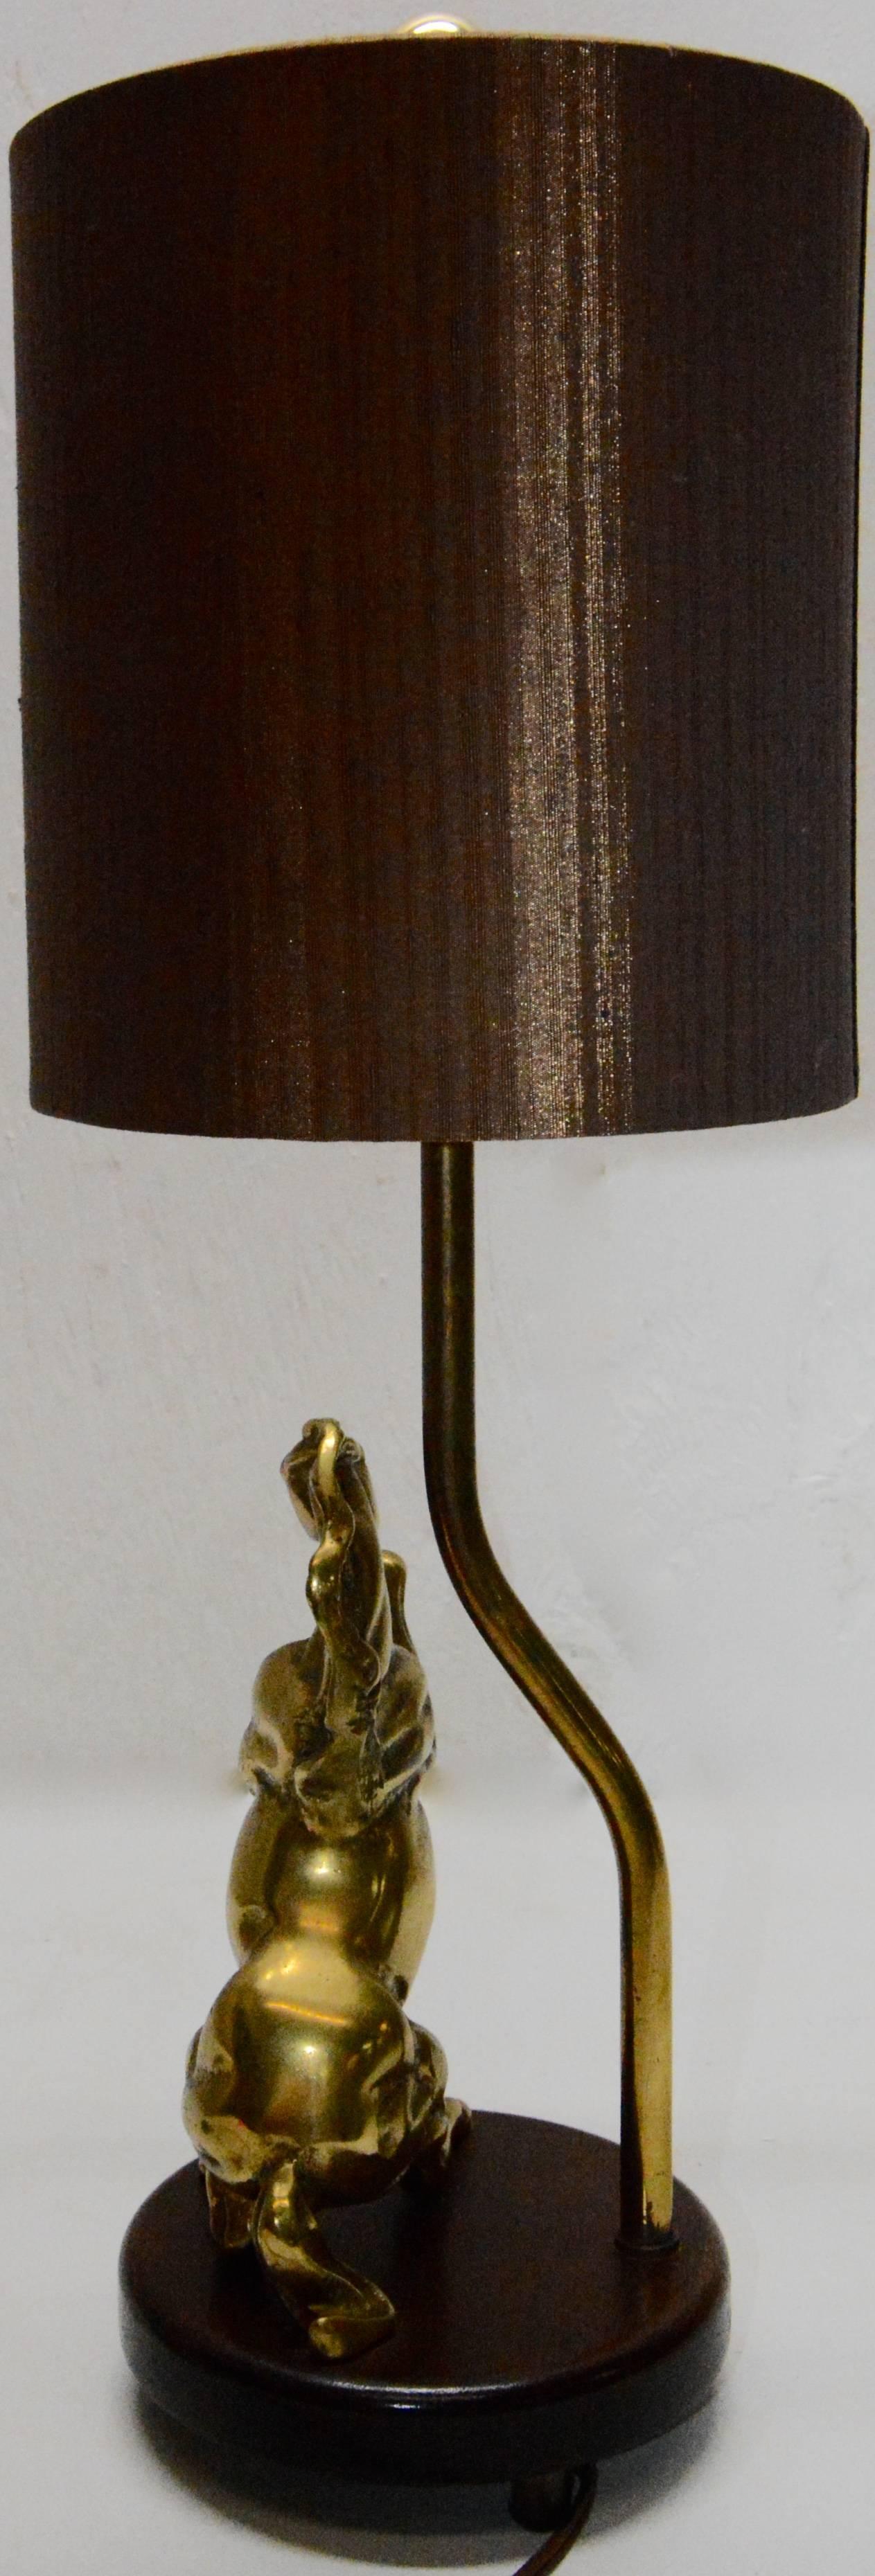 vintage horse lamp